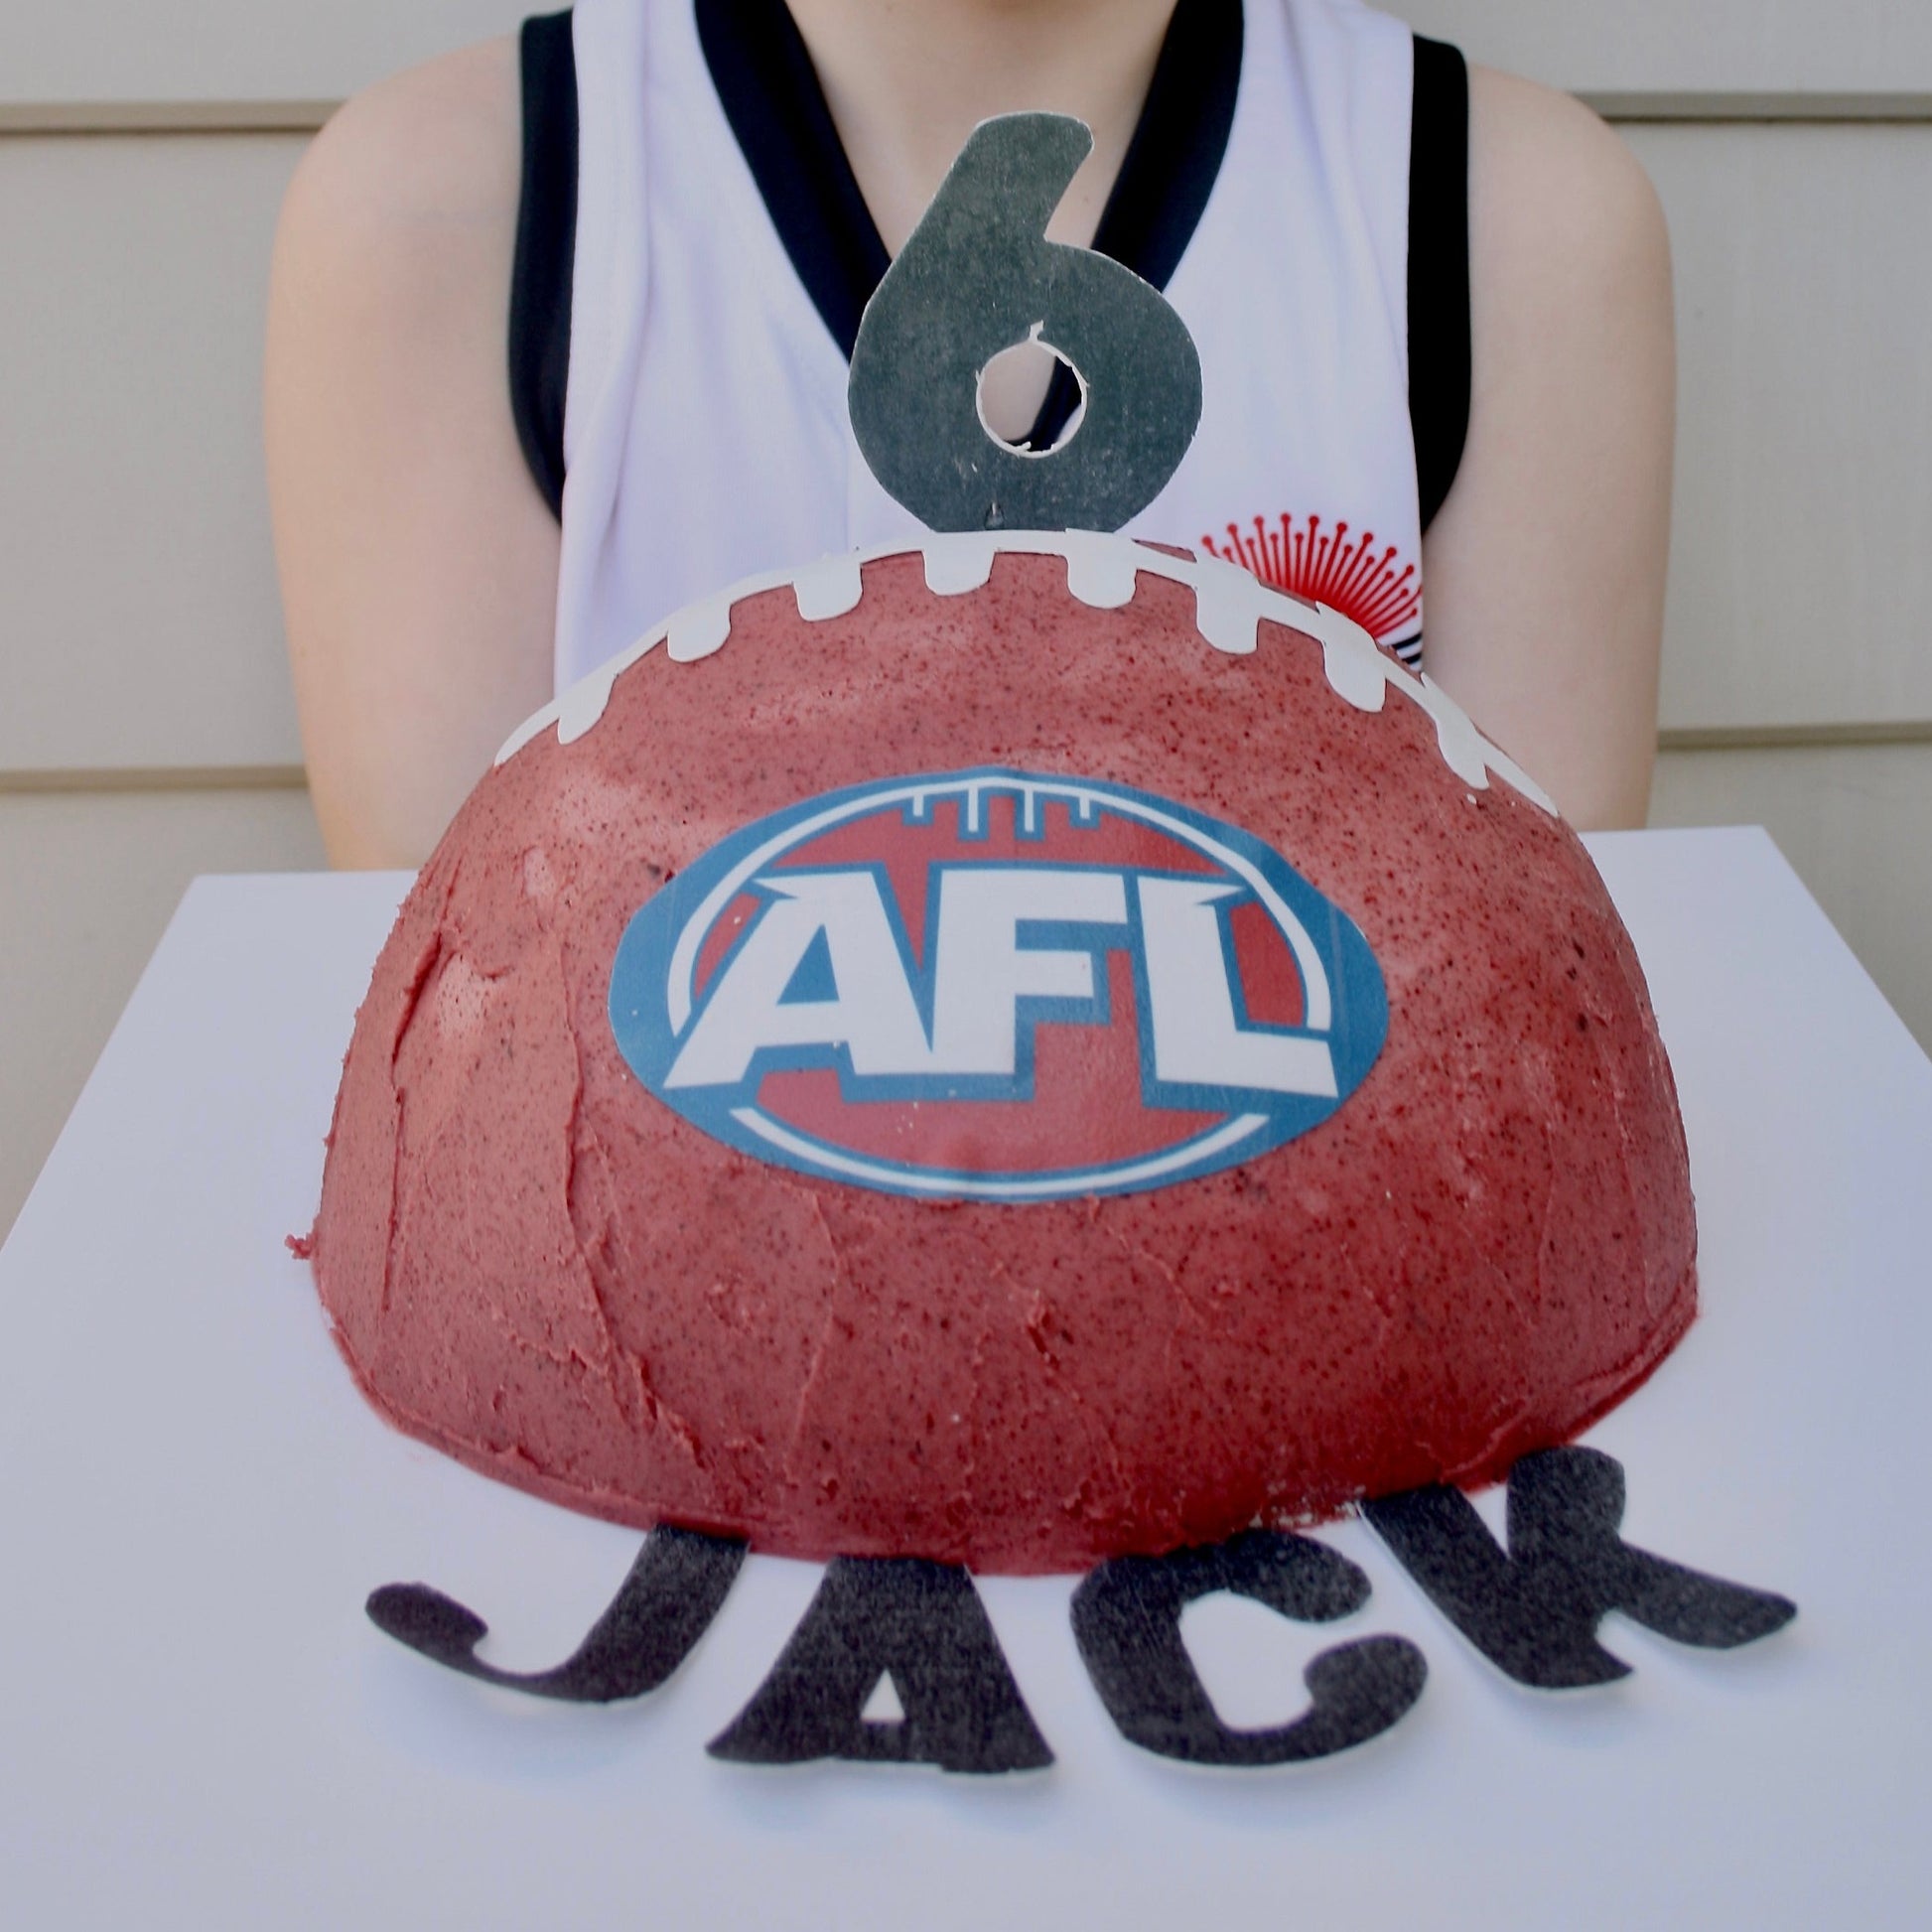 AFL Ball cake kit